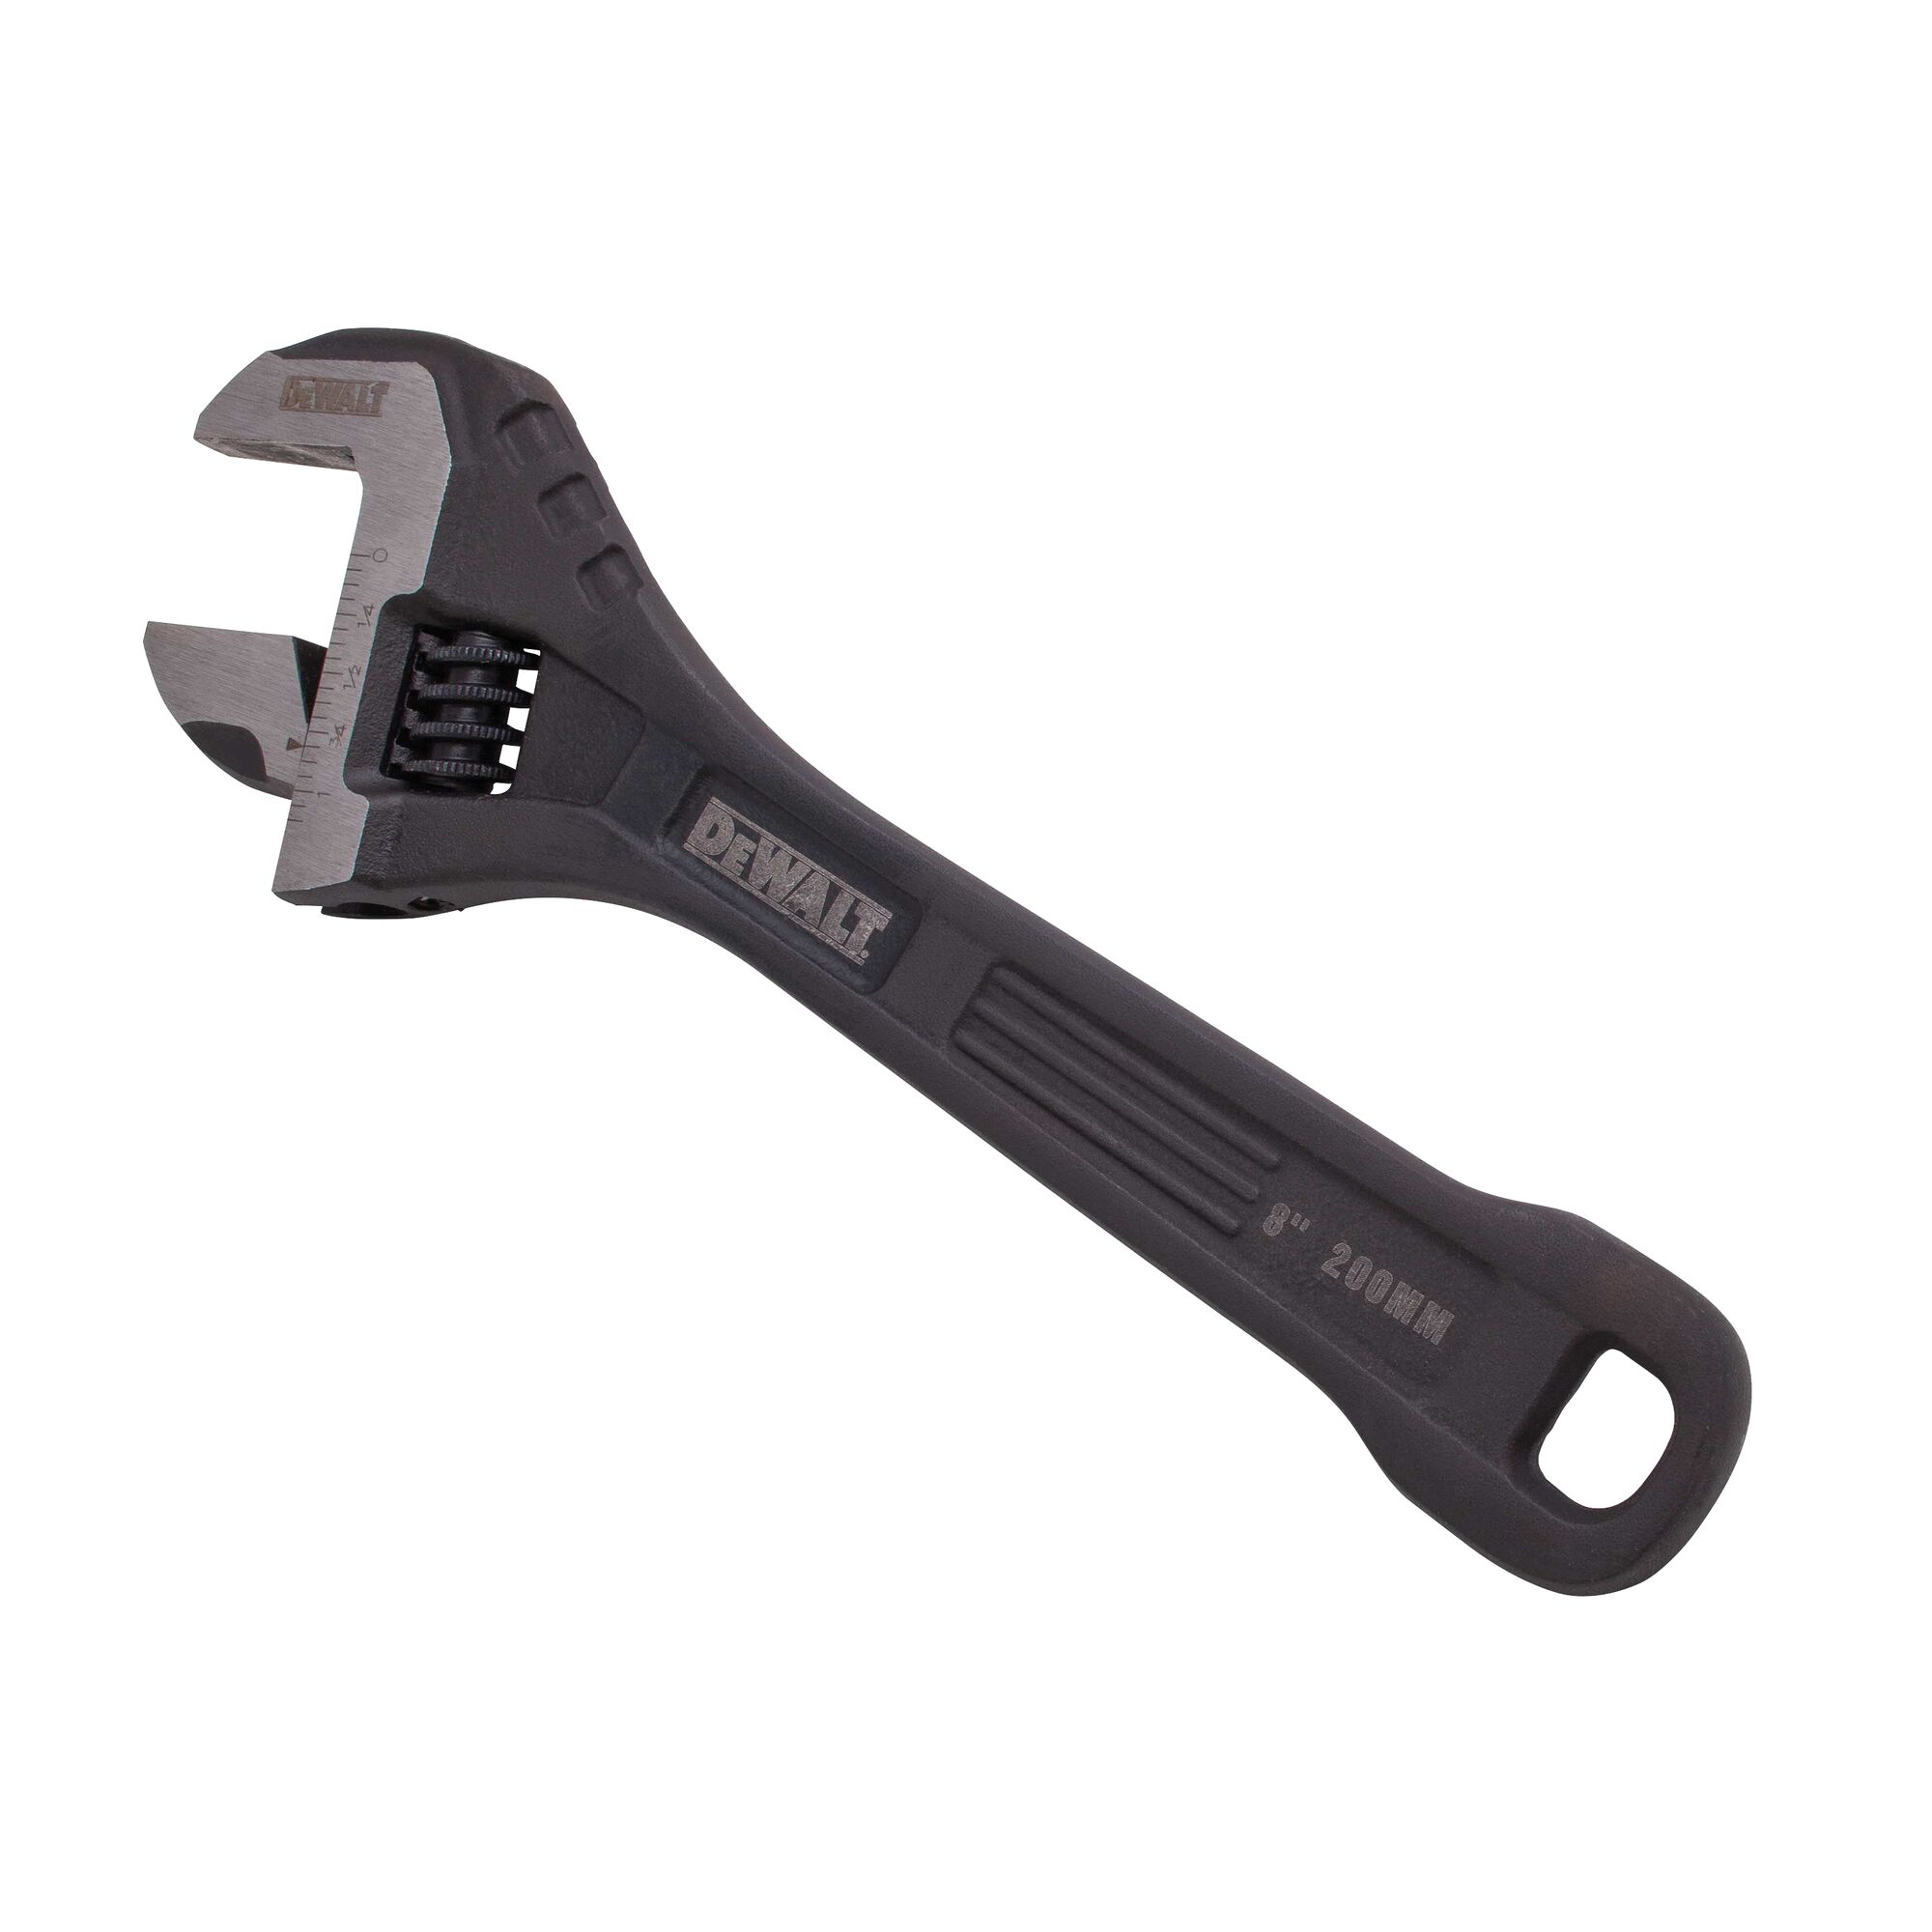 DEWALT DWHT80267 8" All-steel Adjustable Wrench for sale online 